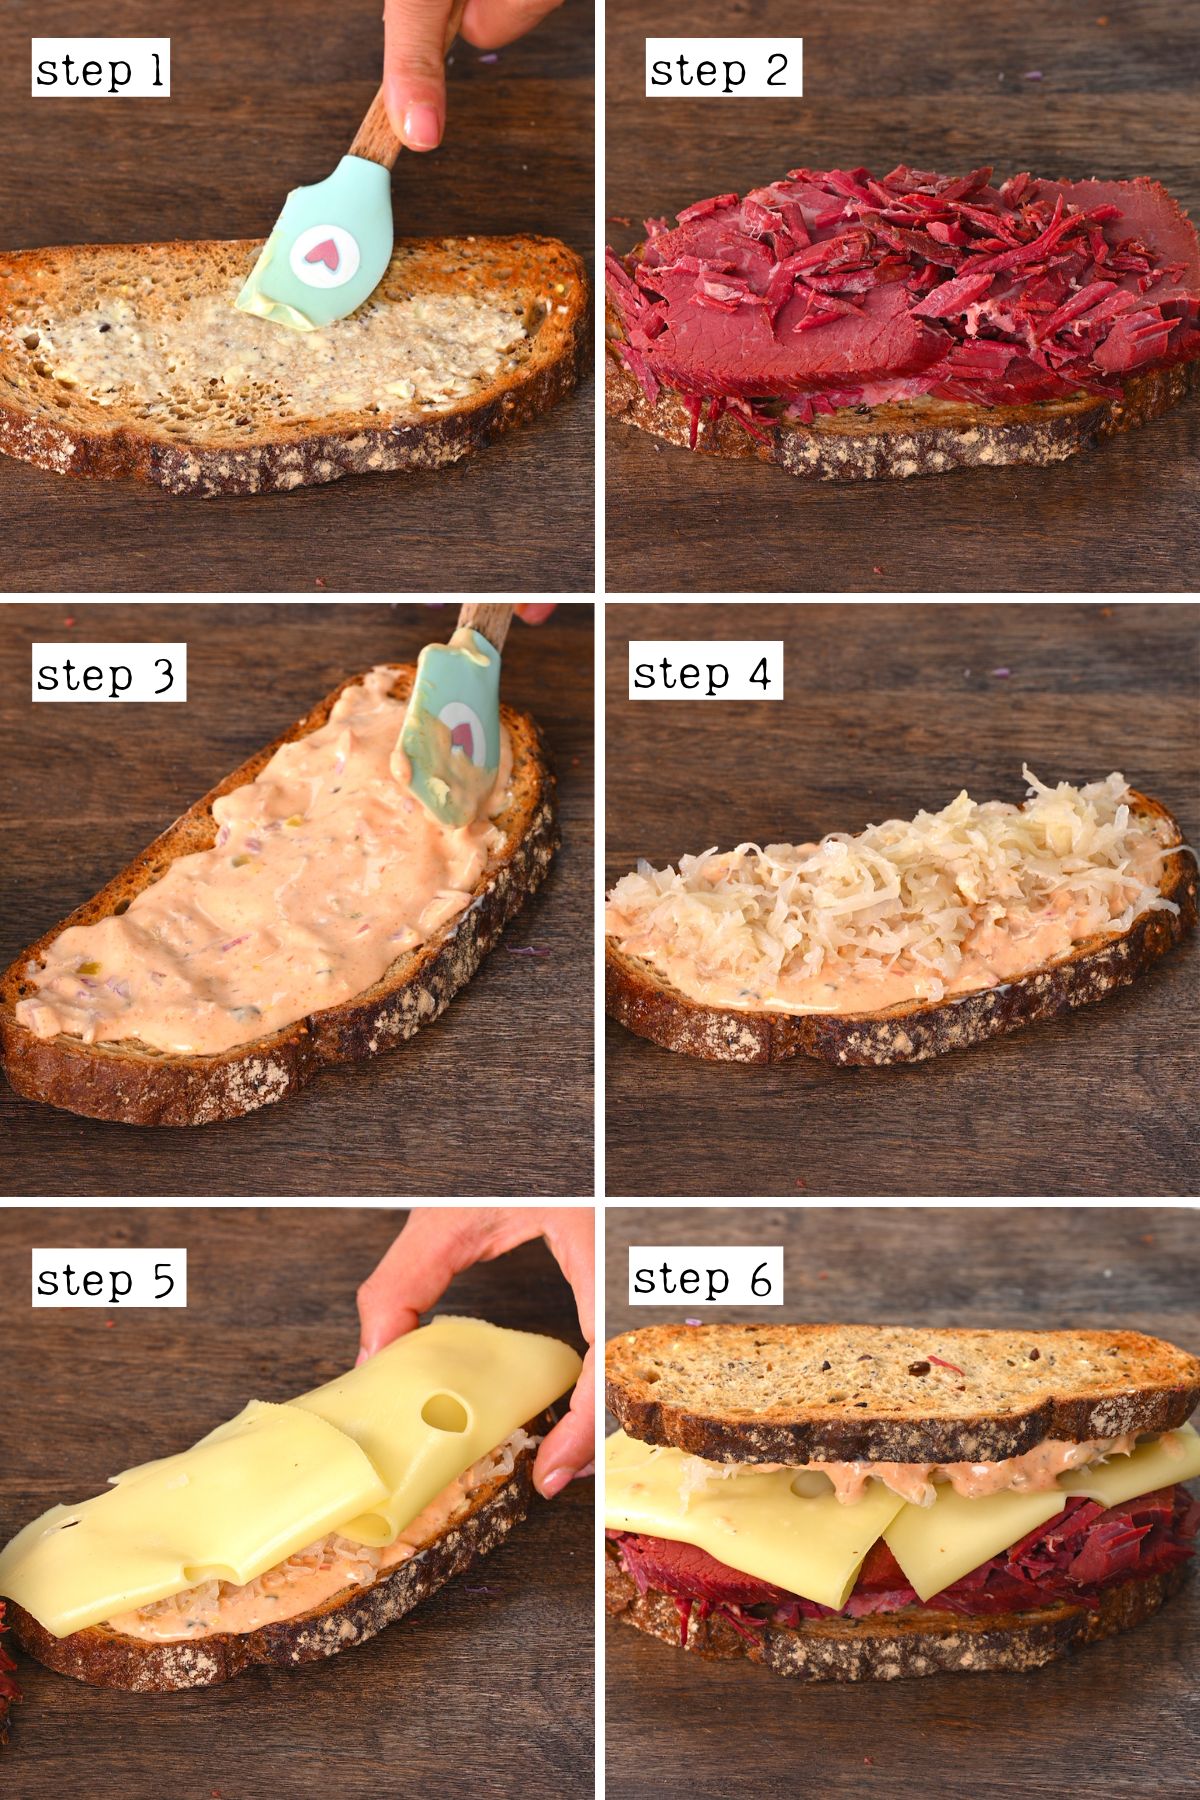 Steps for stacking a Reuben sandwich